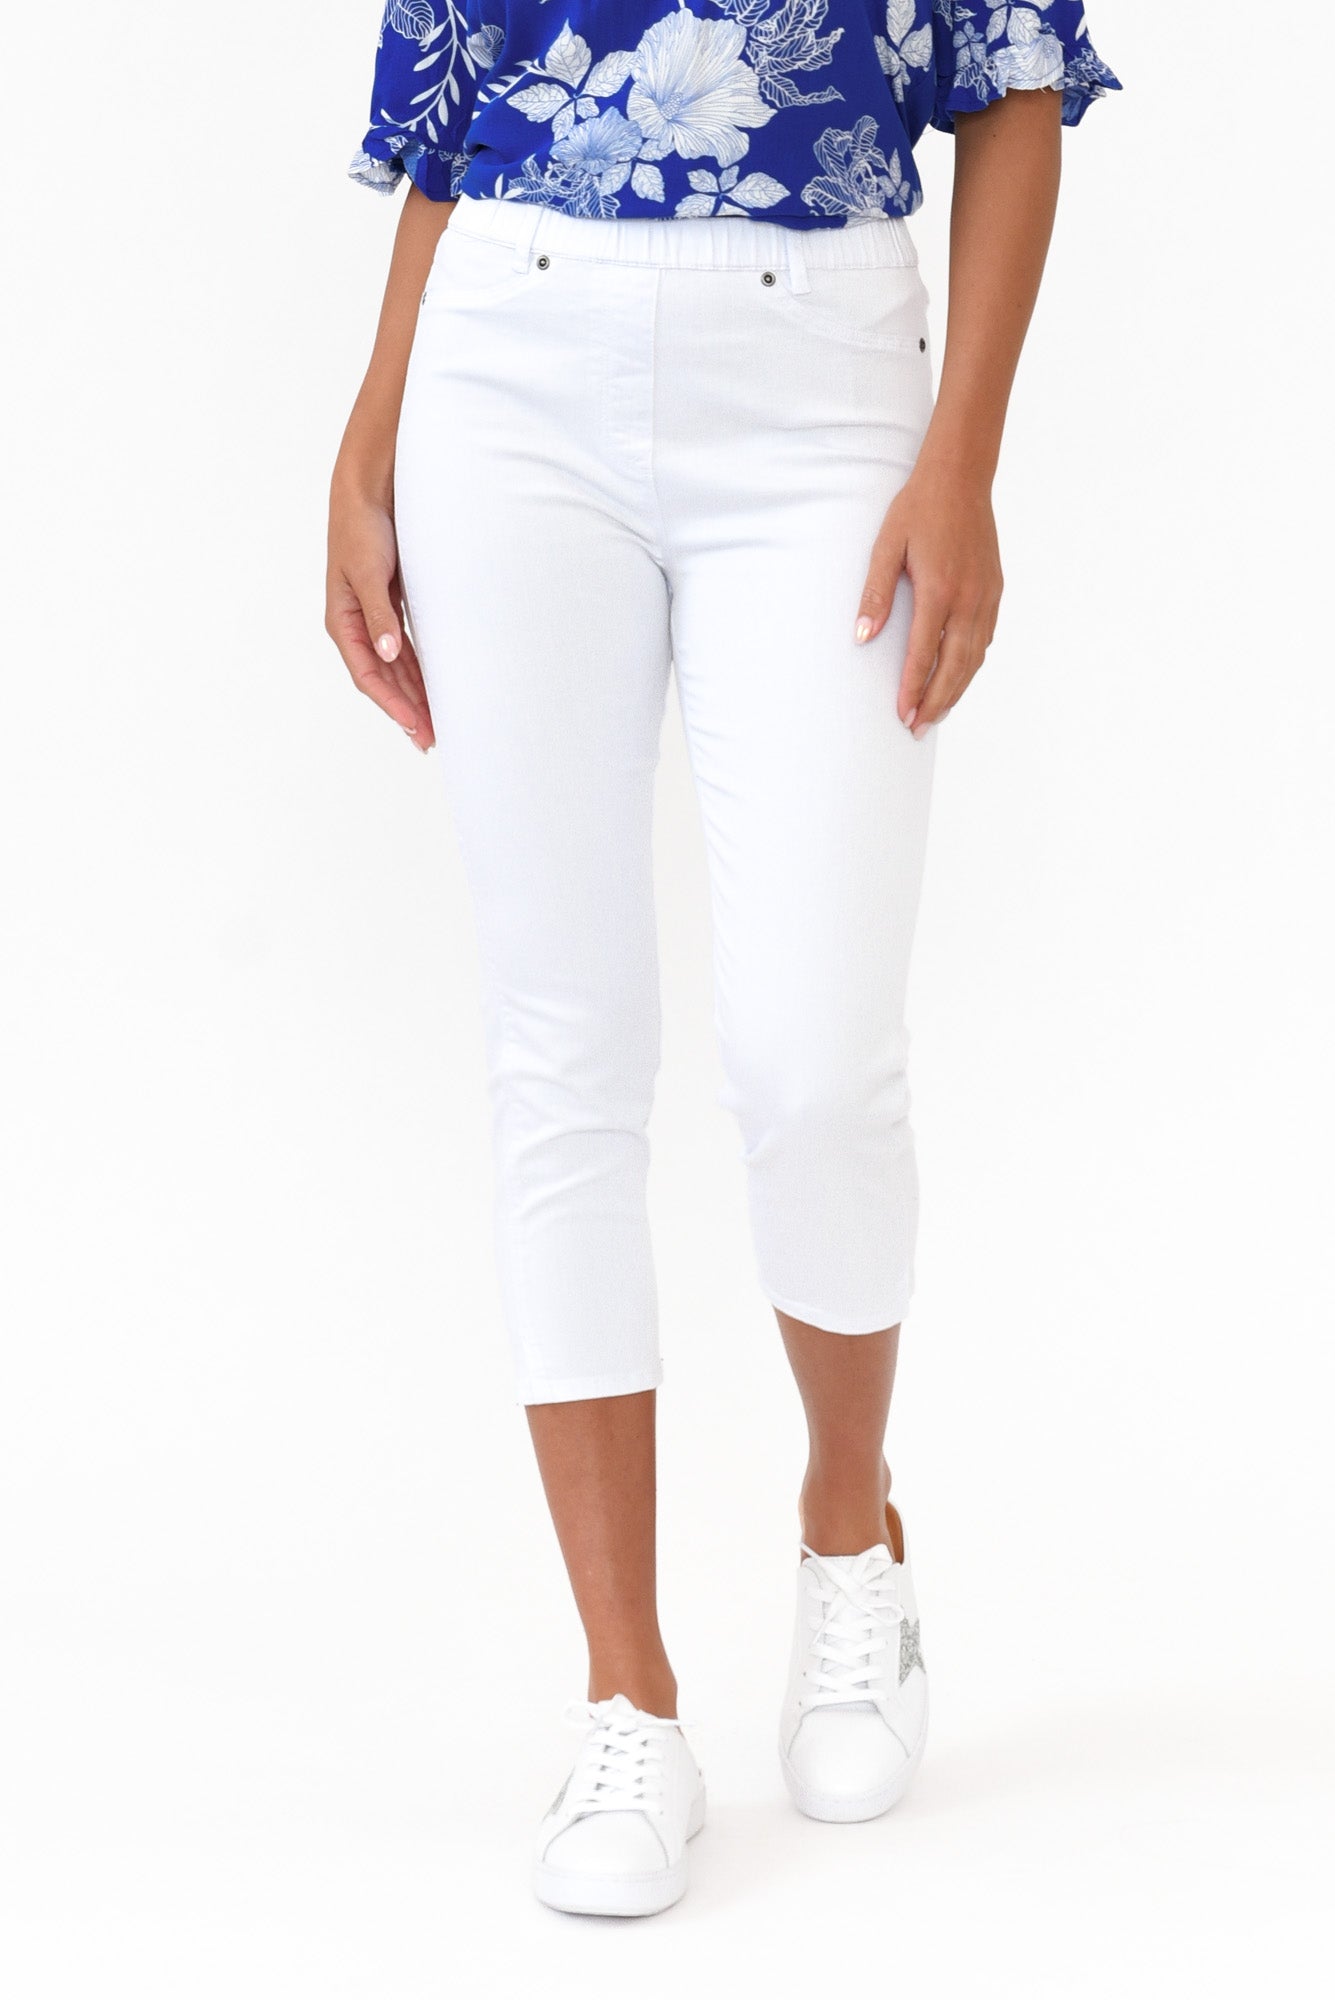 Capri pants cotton stretch | OUI Onlineshop